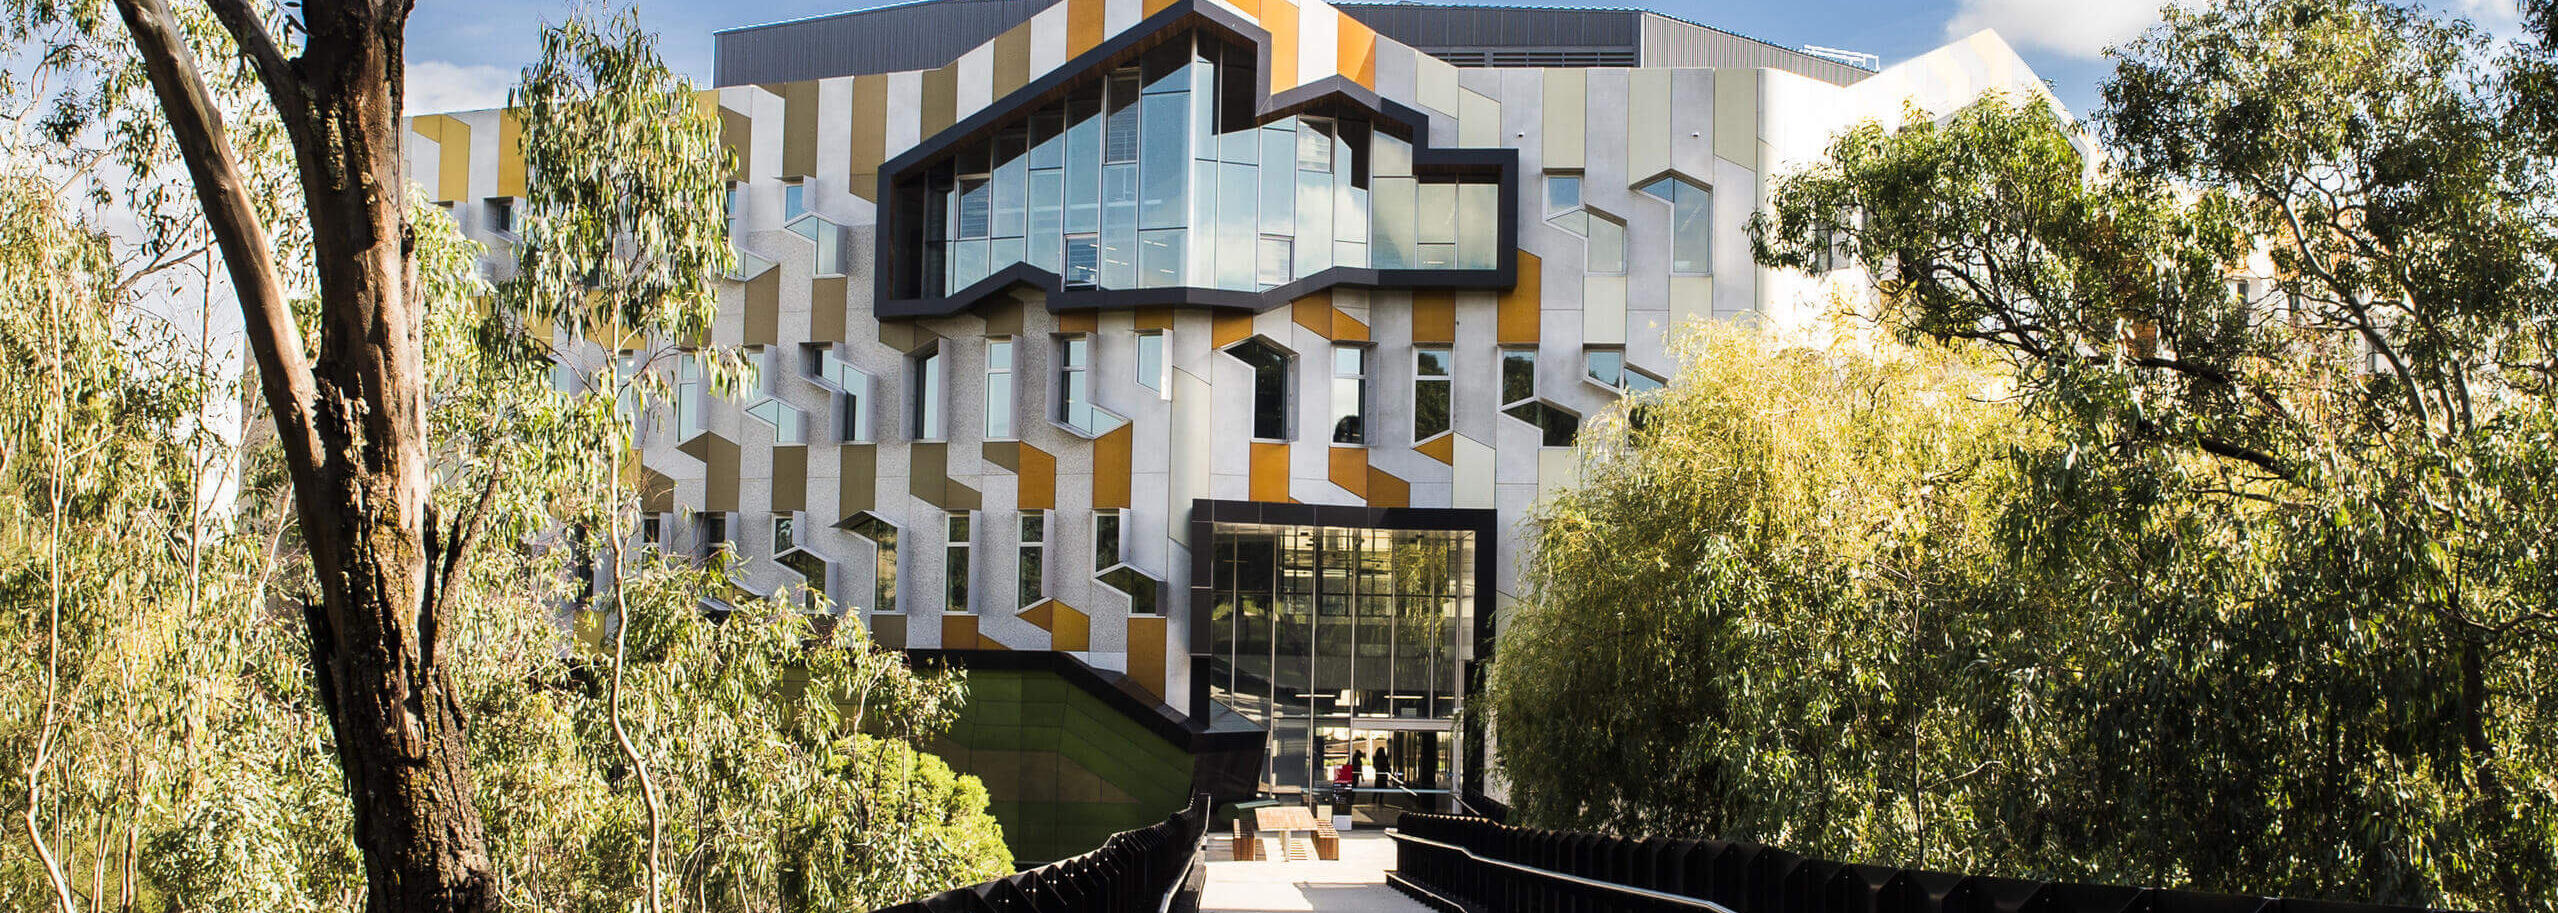 La Trobe University Melbourne